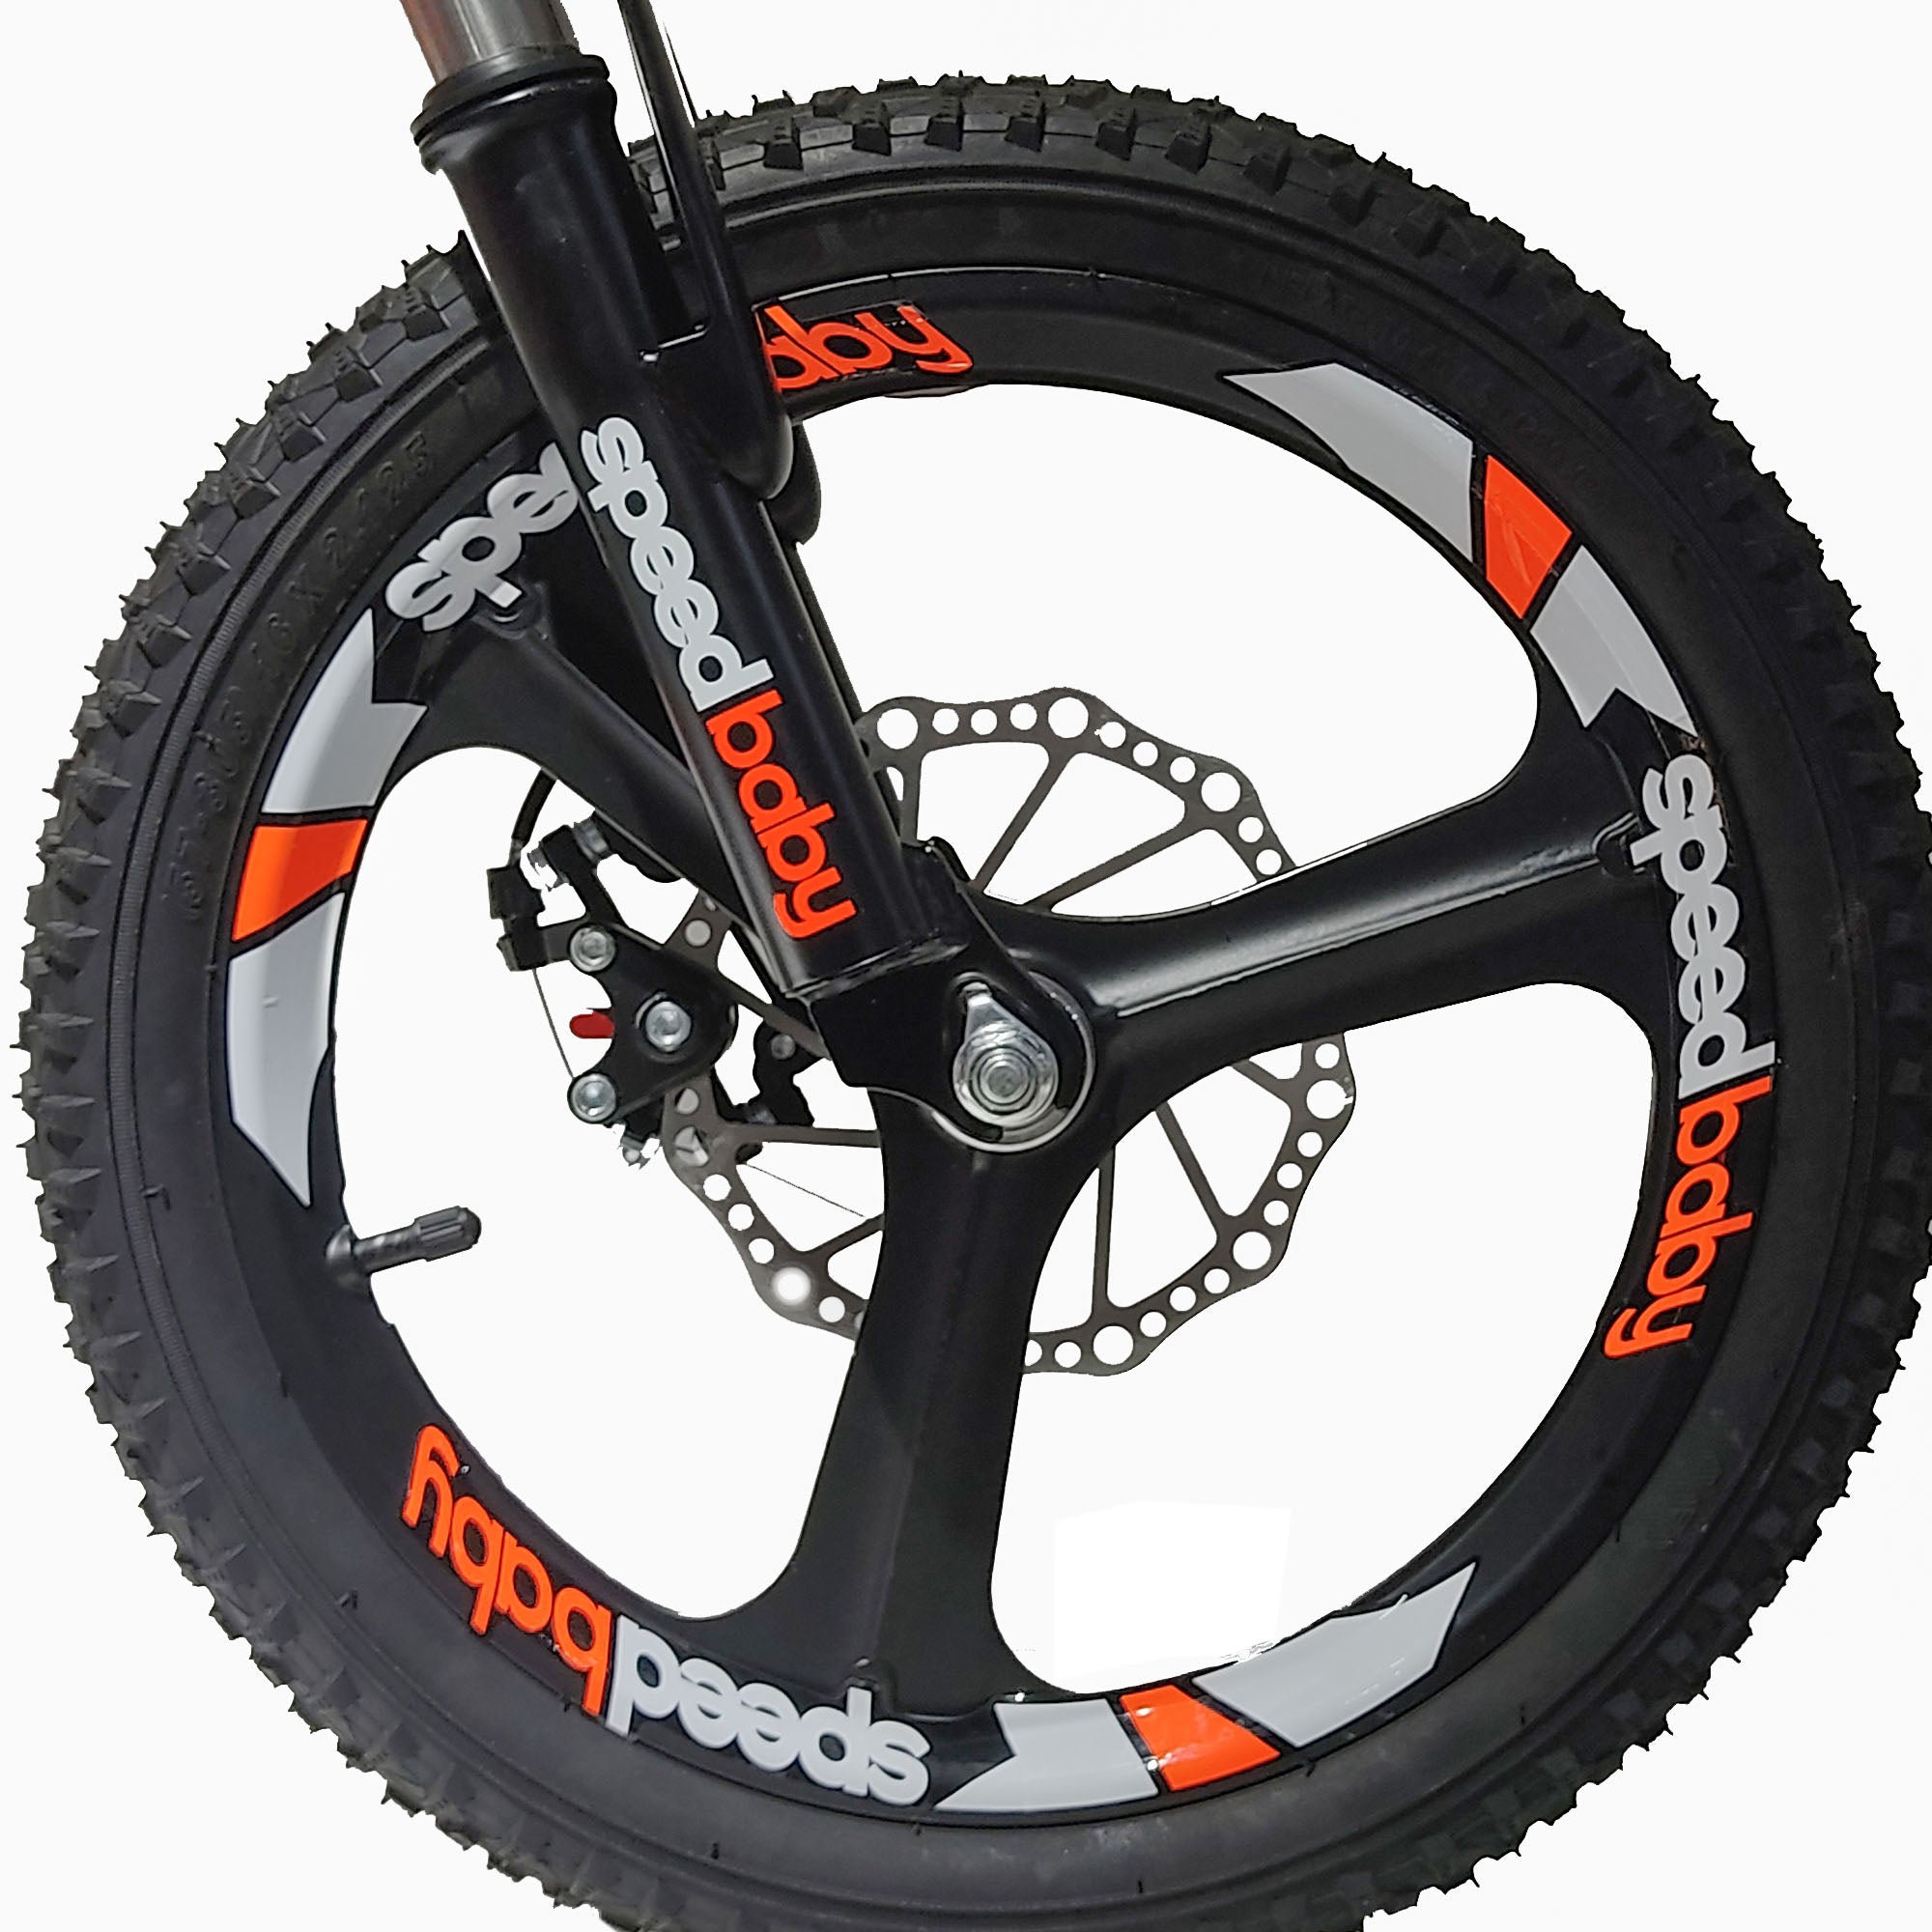 16 SpeedBaby Orange tire alloy wheel